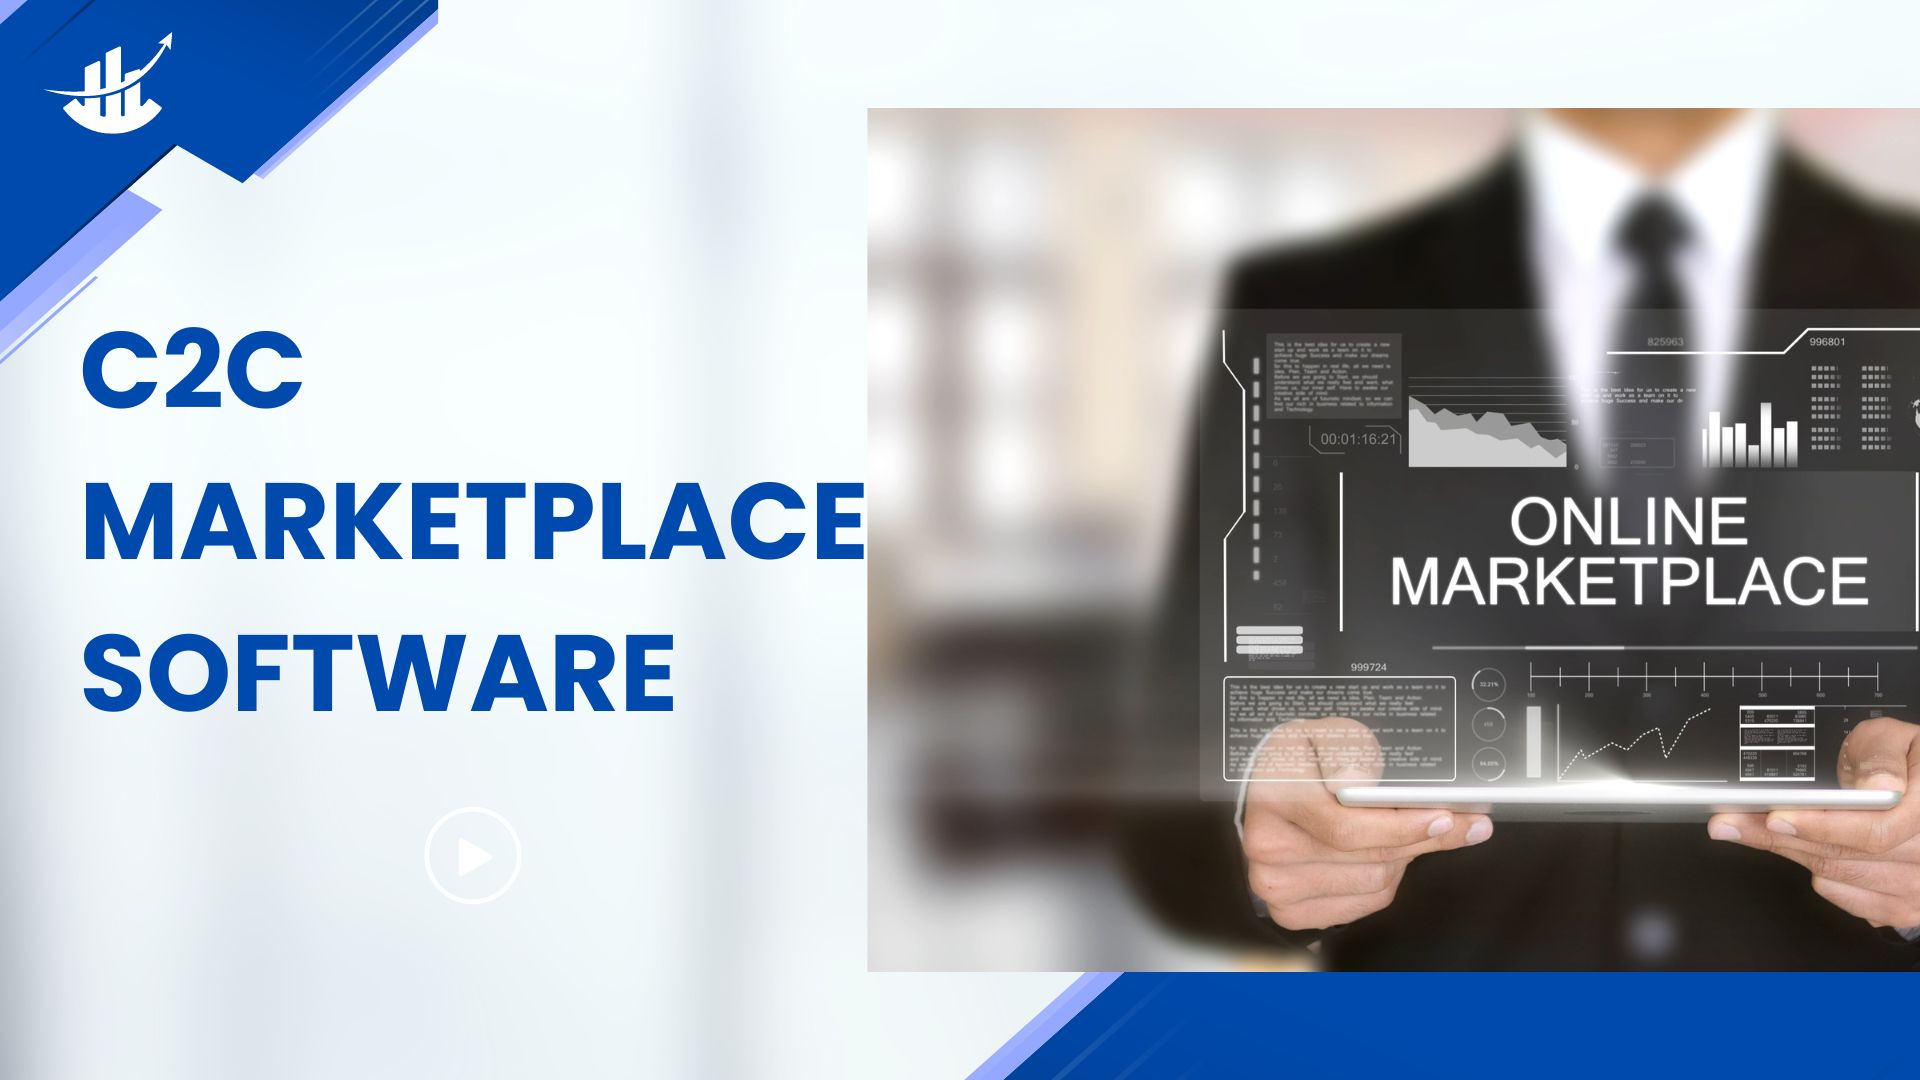 C2C Marketplace Software